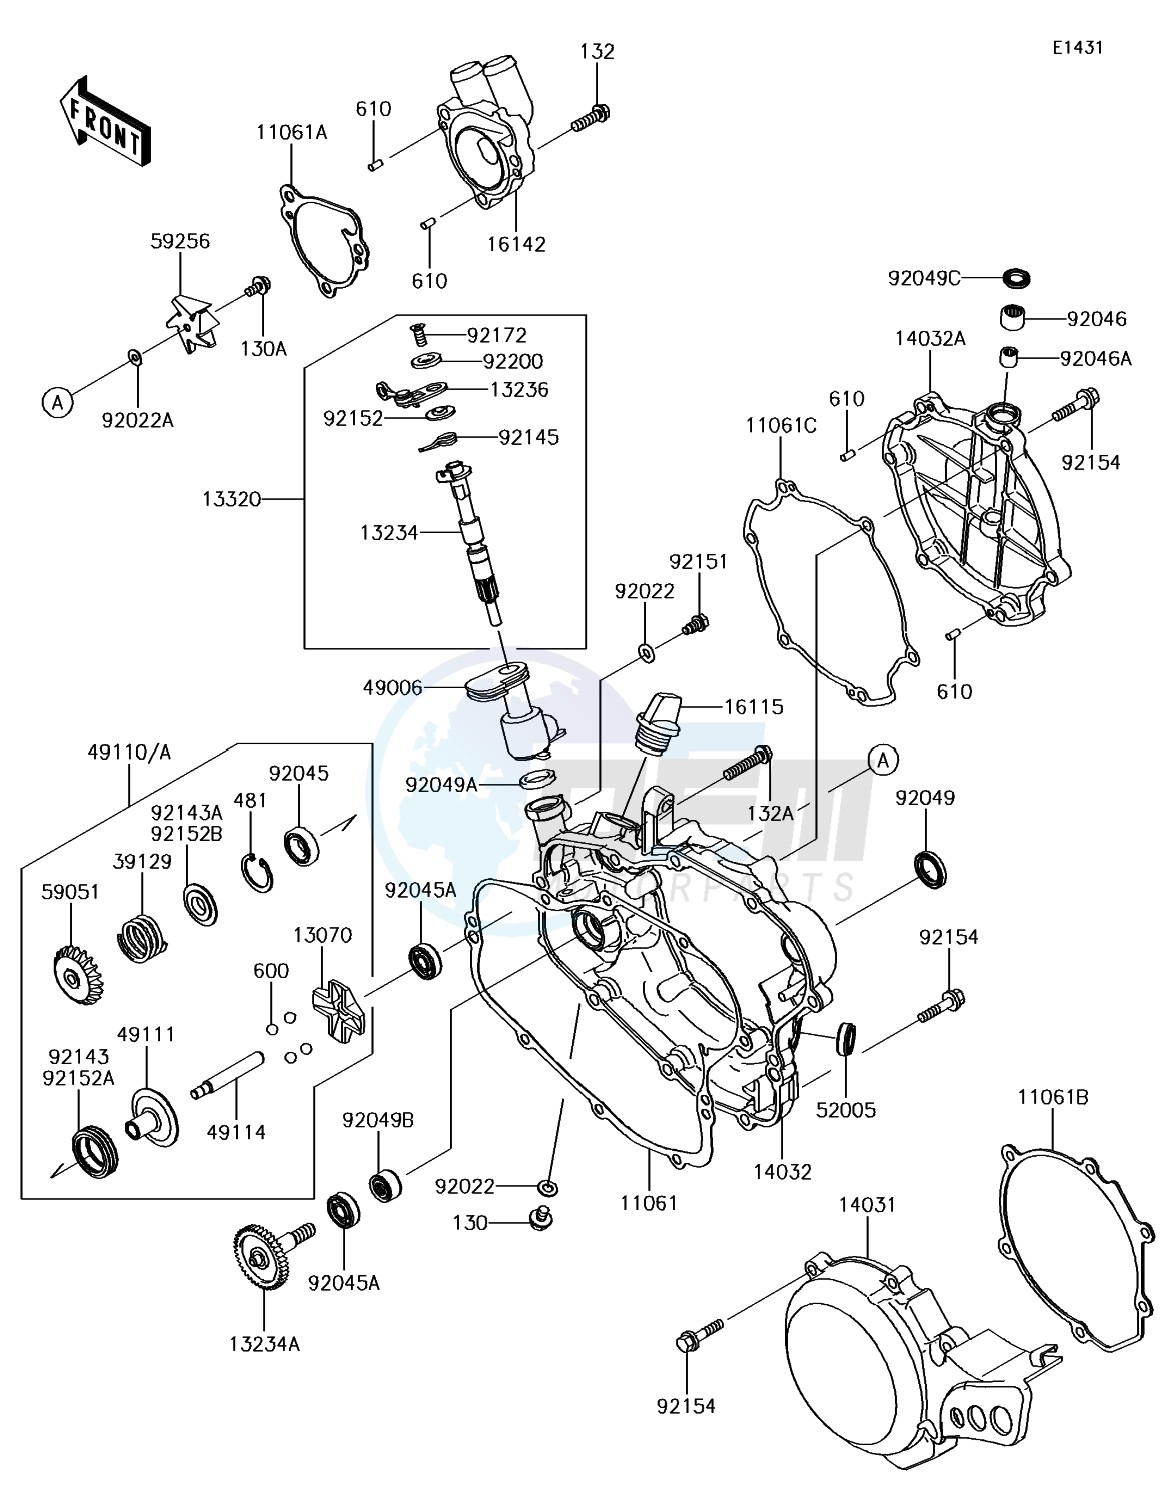 Engine Cover(s) blueprint